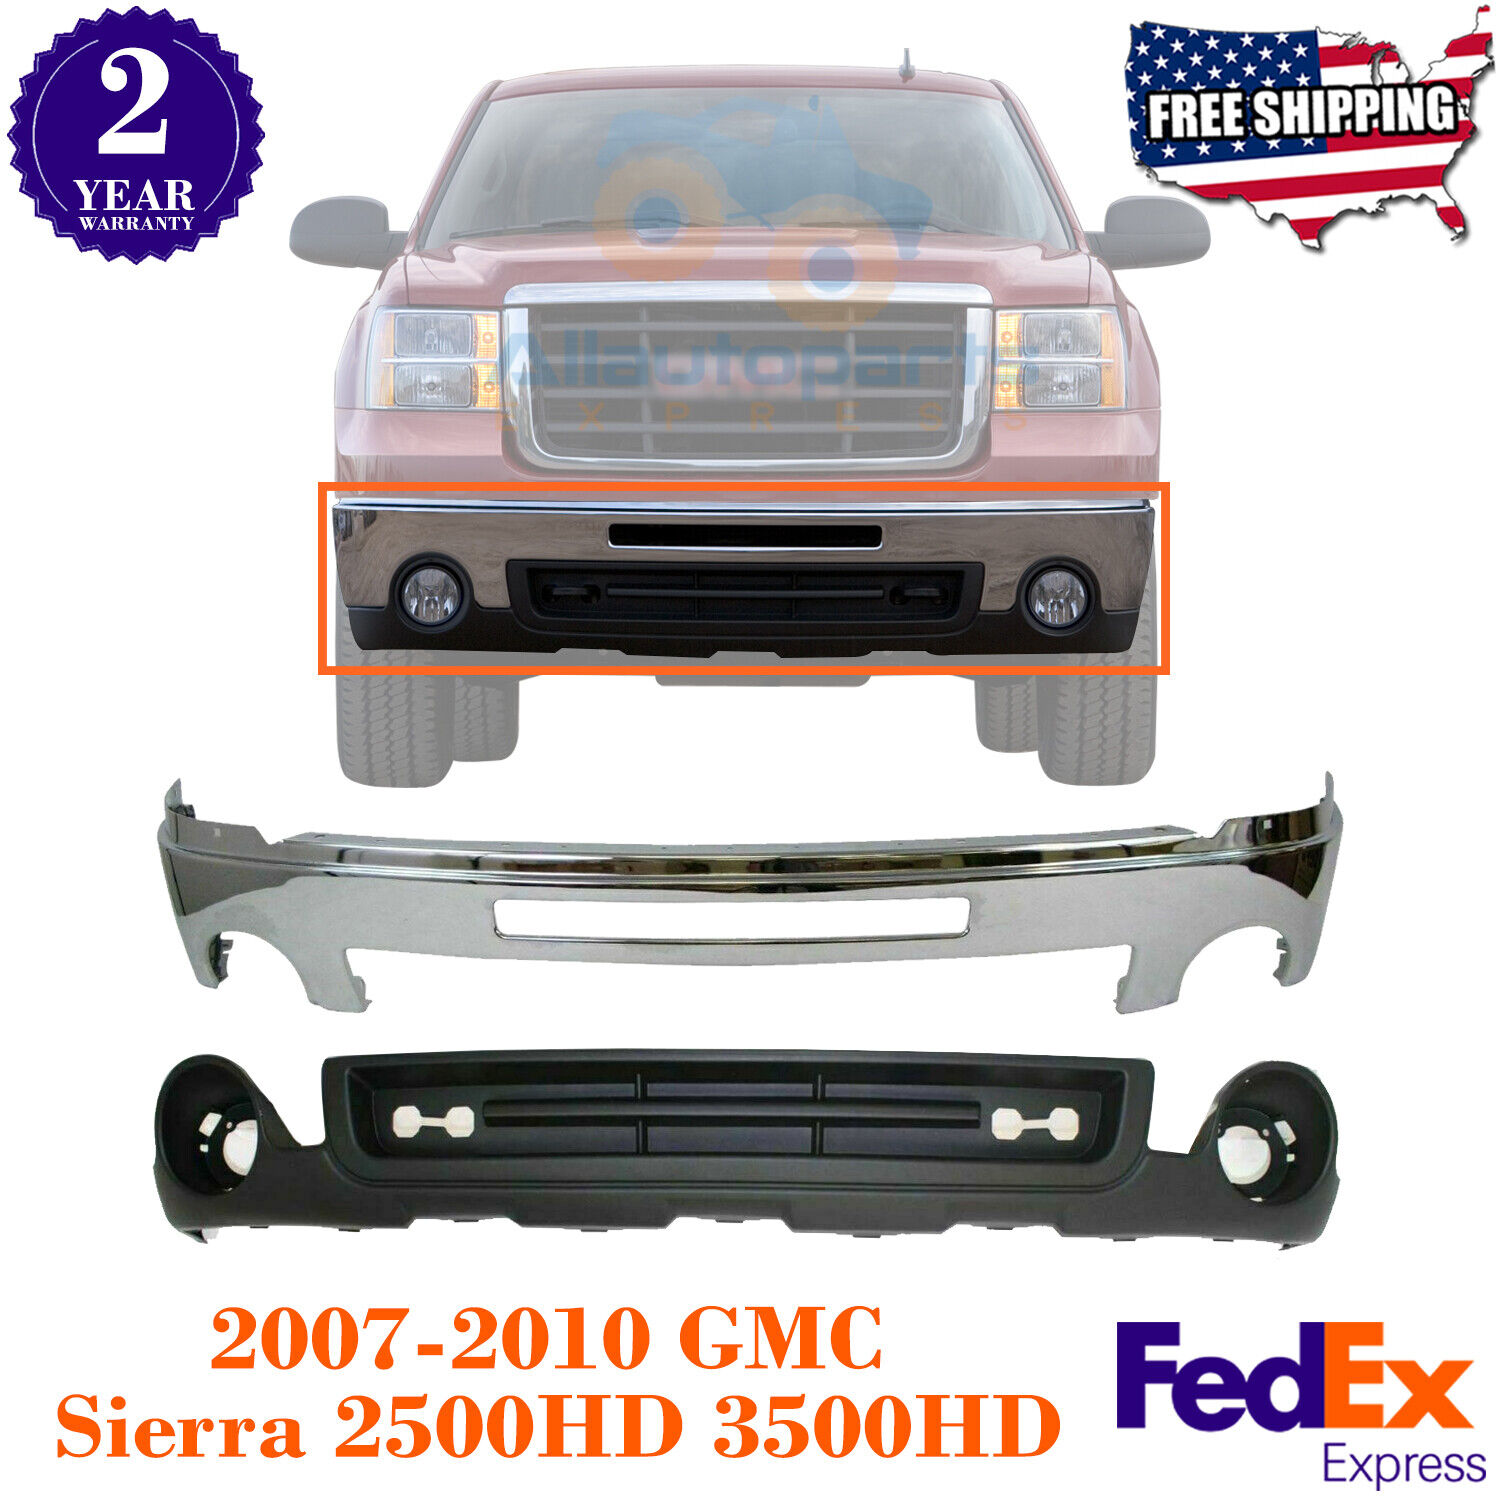 Front Bumper Chrome Steel + Lower Valance For 2007-2010 GMC Sierra 2500HD 3500HD